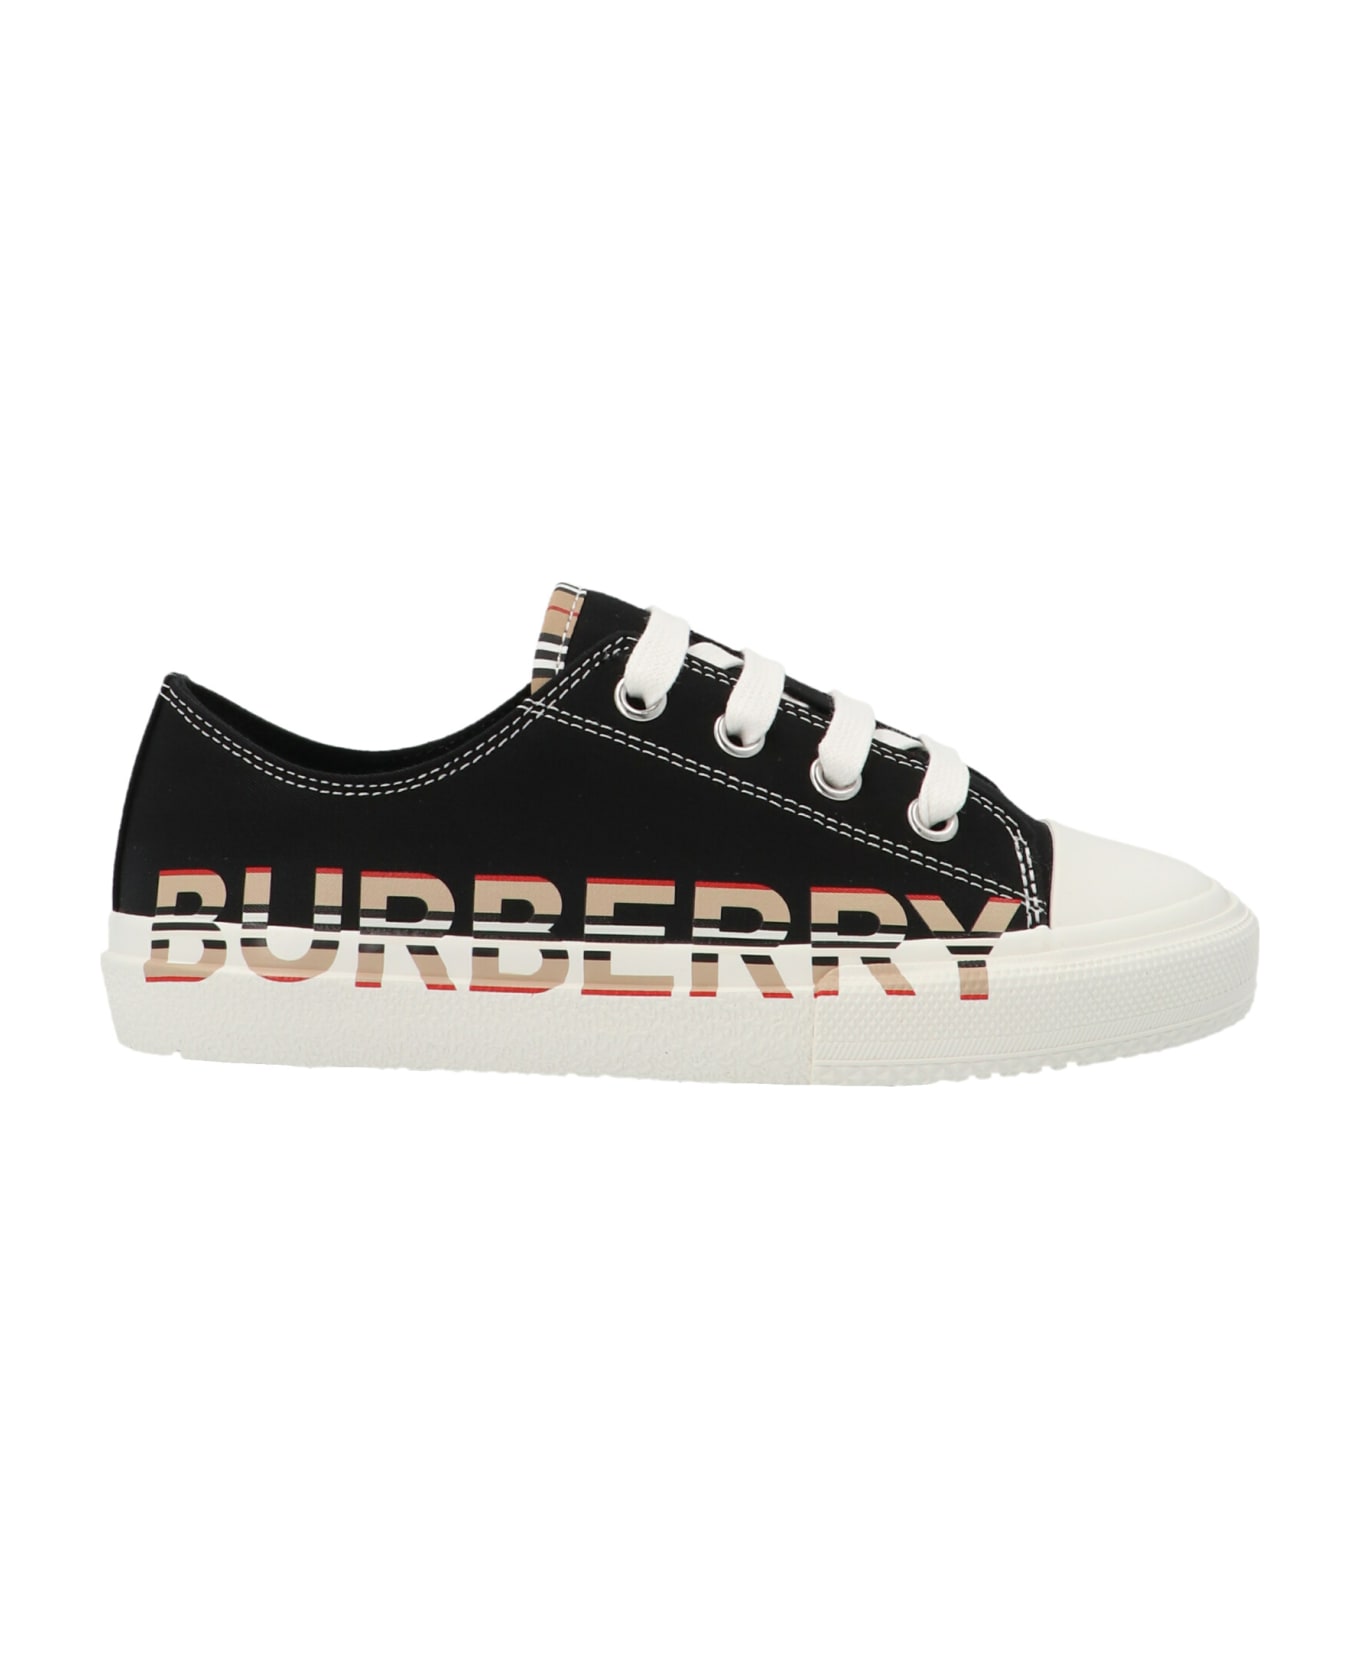 Burberry Logo Sneakers - Black  